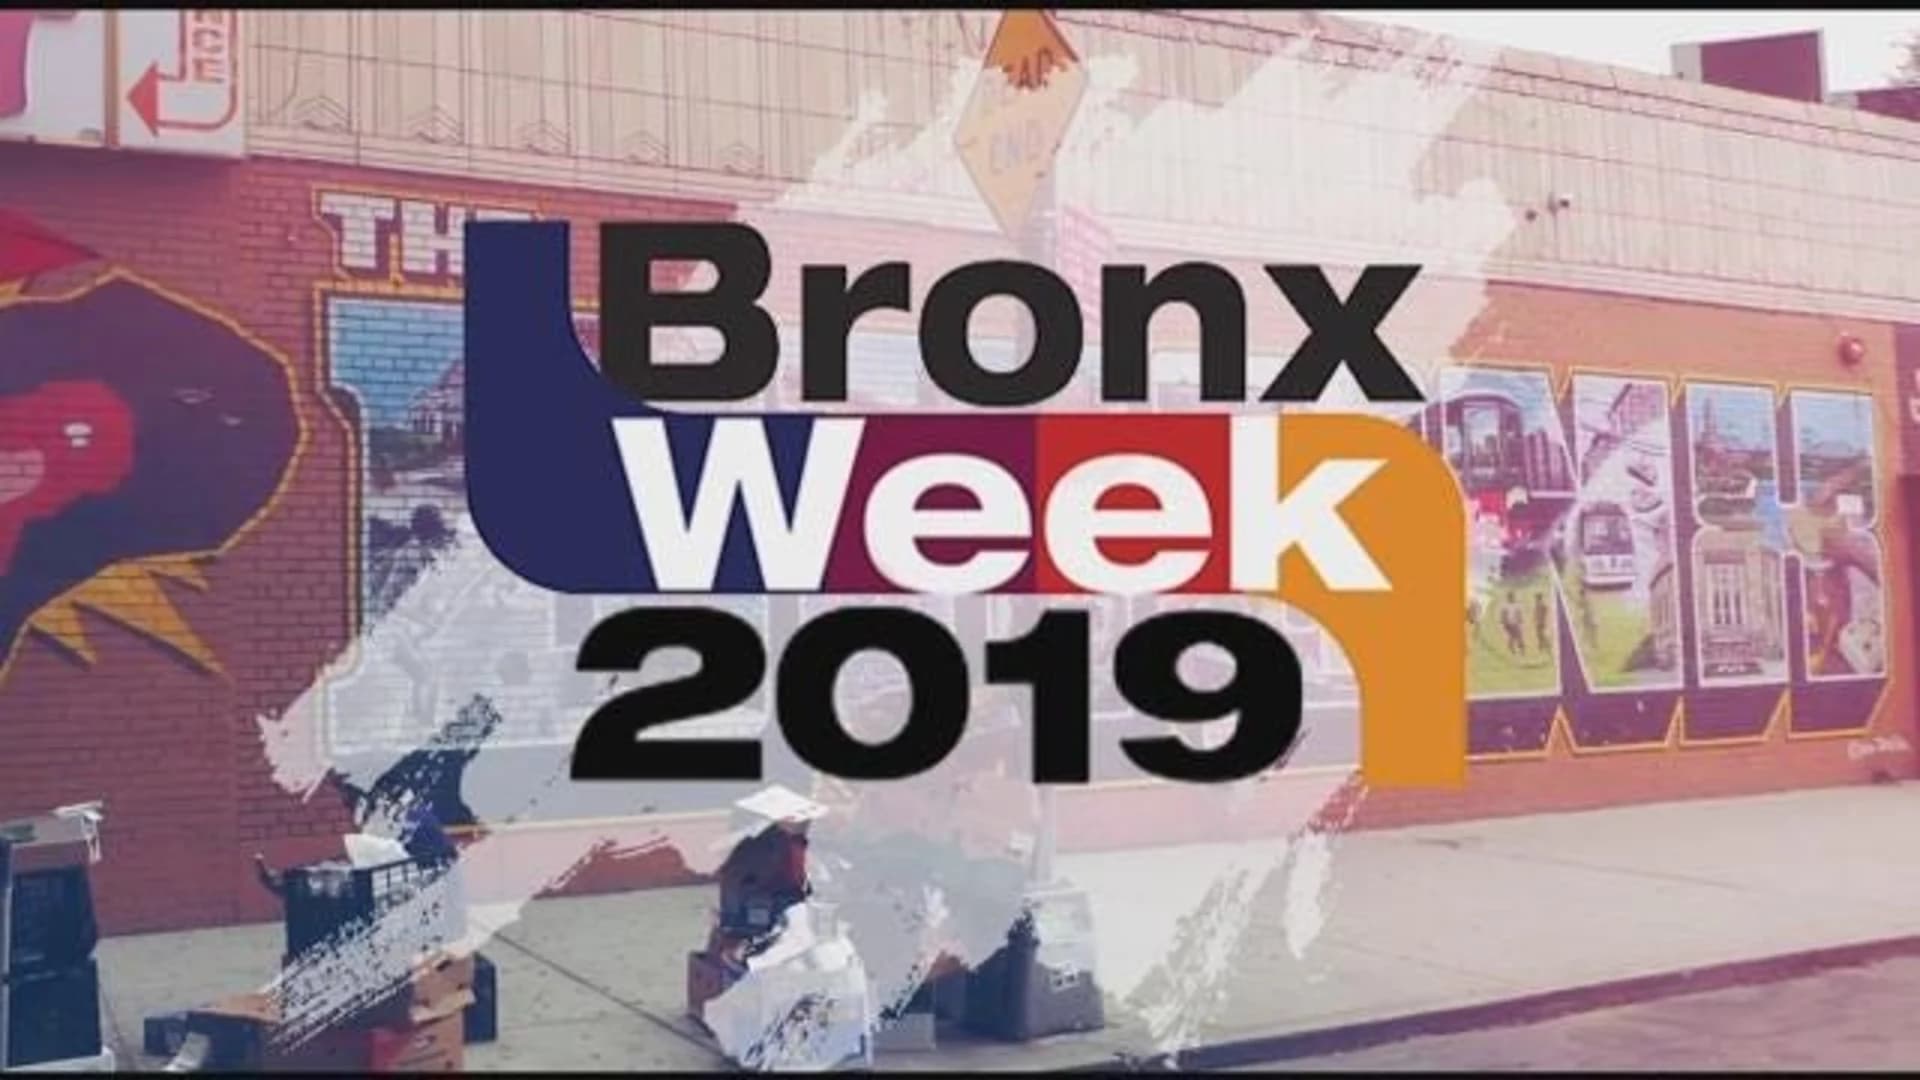 Bronx Week 2019 kicks off with tribute to borough's centenarians